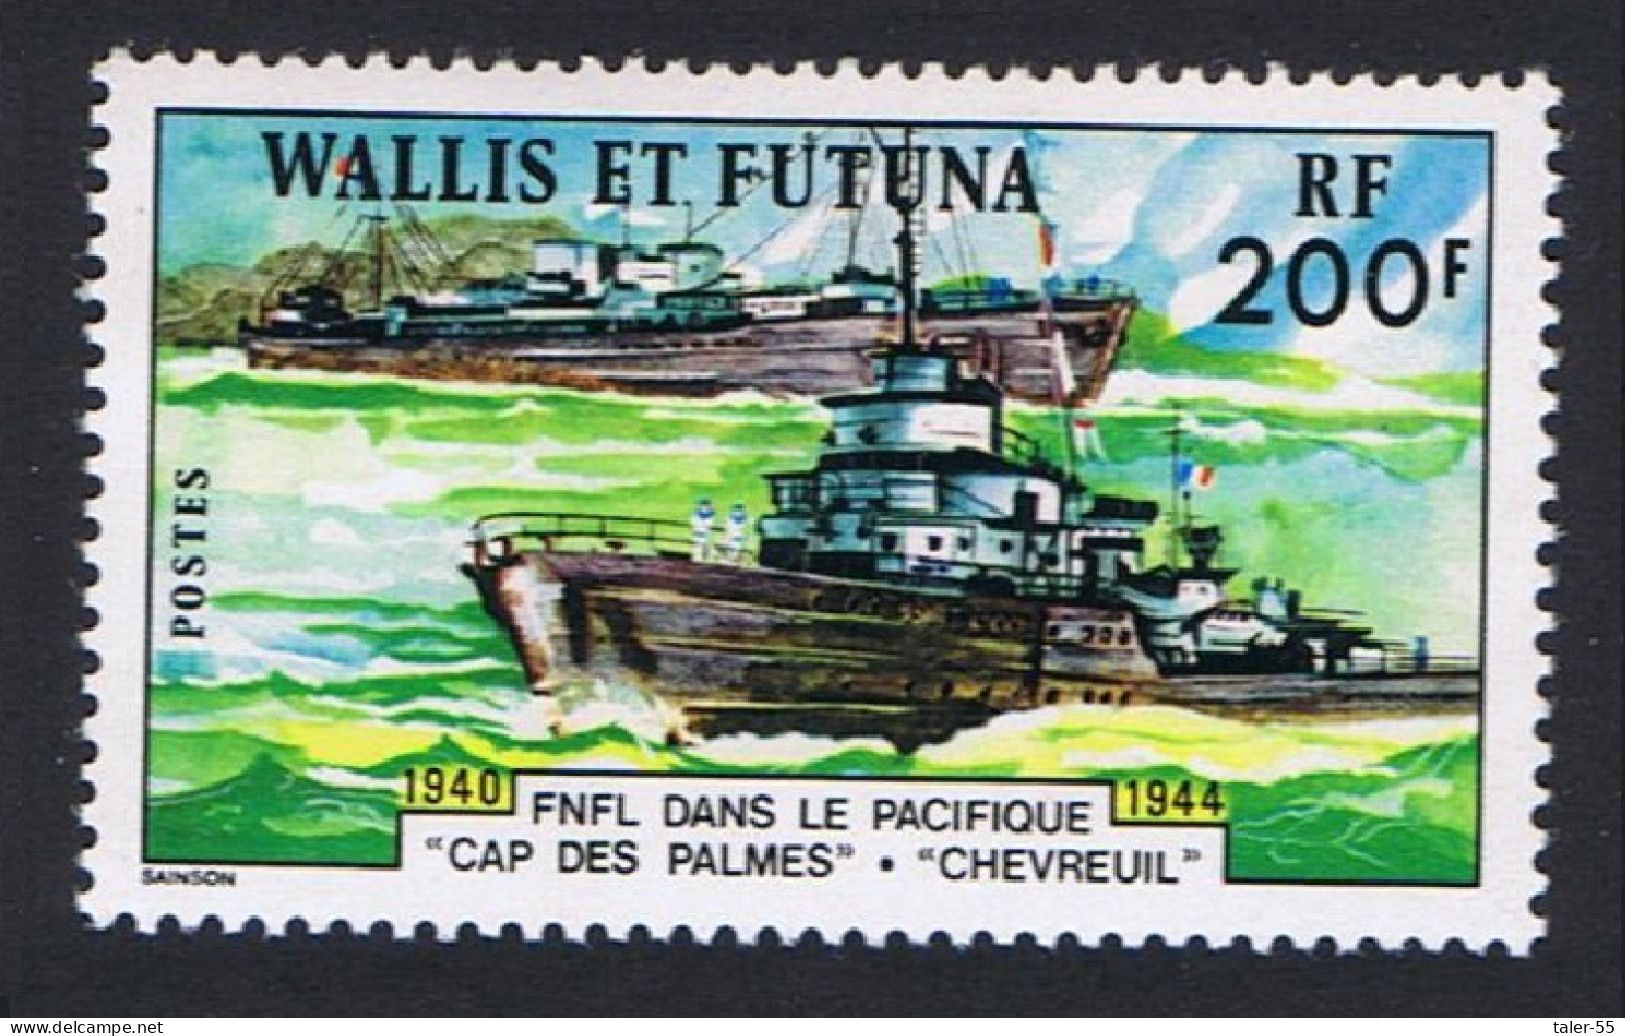 Wallis And Futuna Pacific Naval Force 200f 1978 MNH SG#288 Sc#208 - Ongebruikt